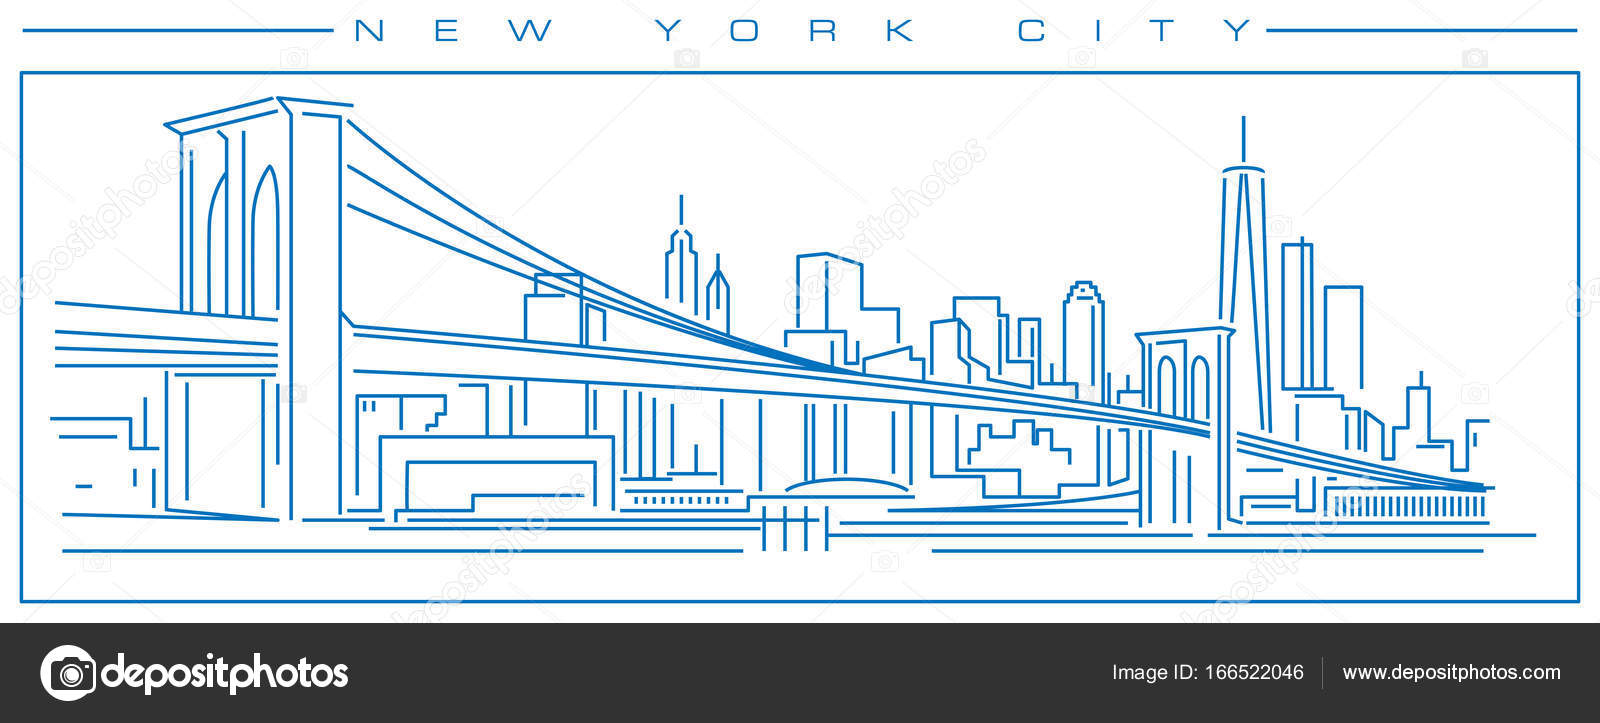 New York City Skyline Stock Vector C Mauromod 166522046